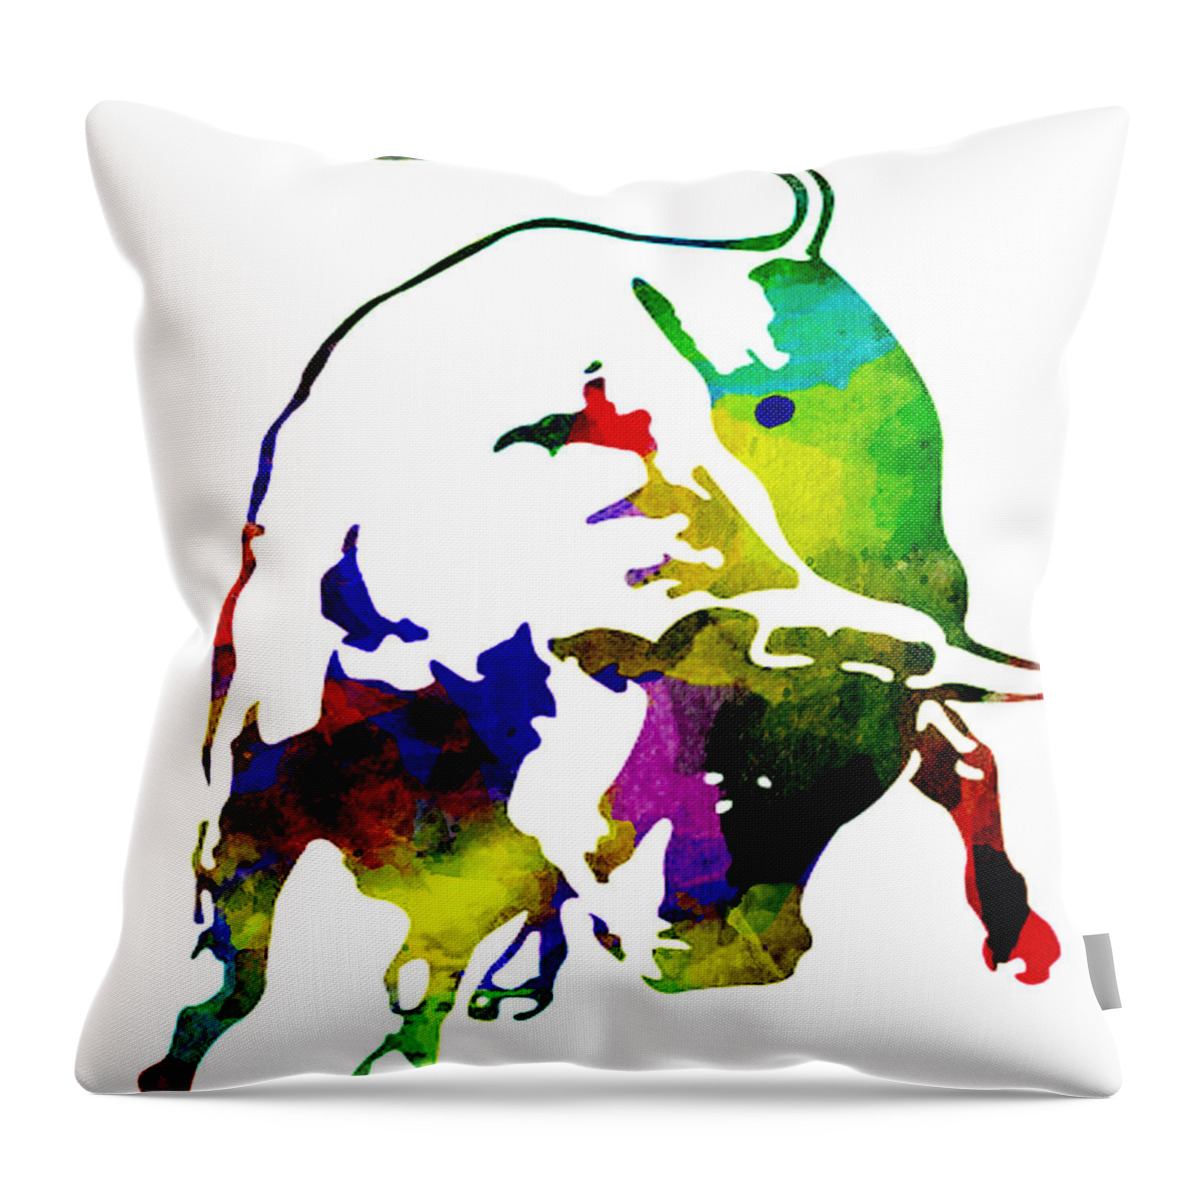 Lambo Throw Pillow featuring the painting Lamborghini bull emblem colorful abstract. by Eti Reid